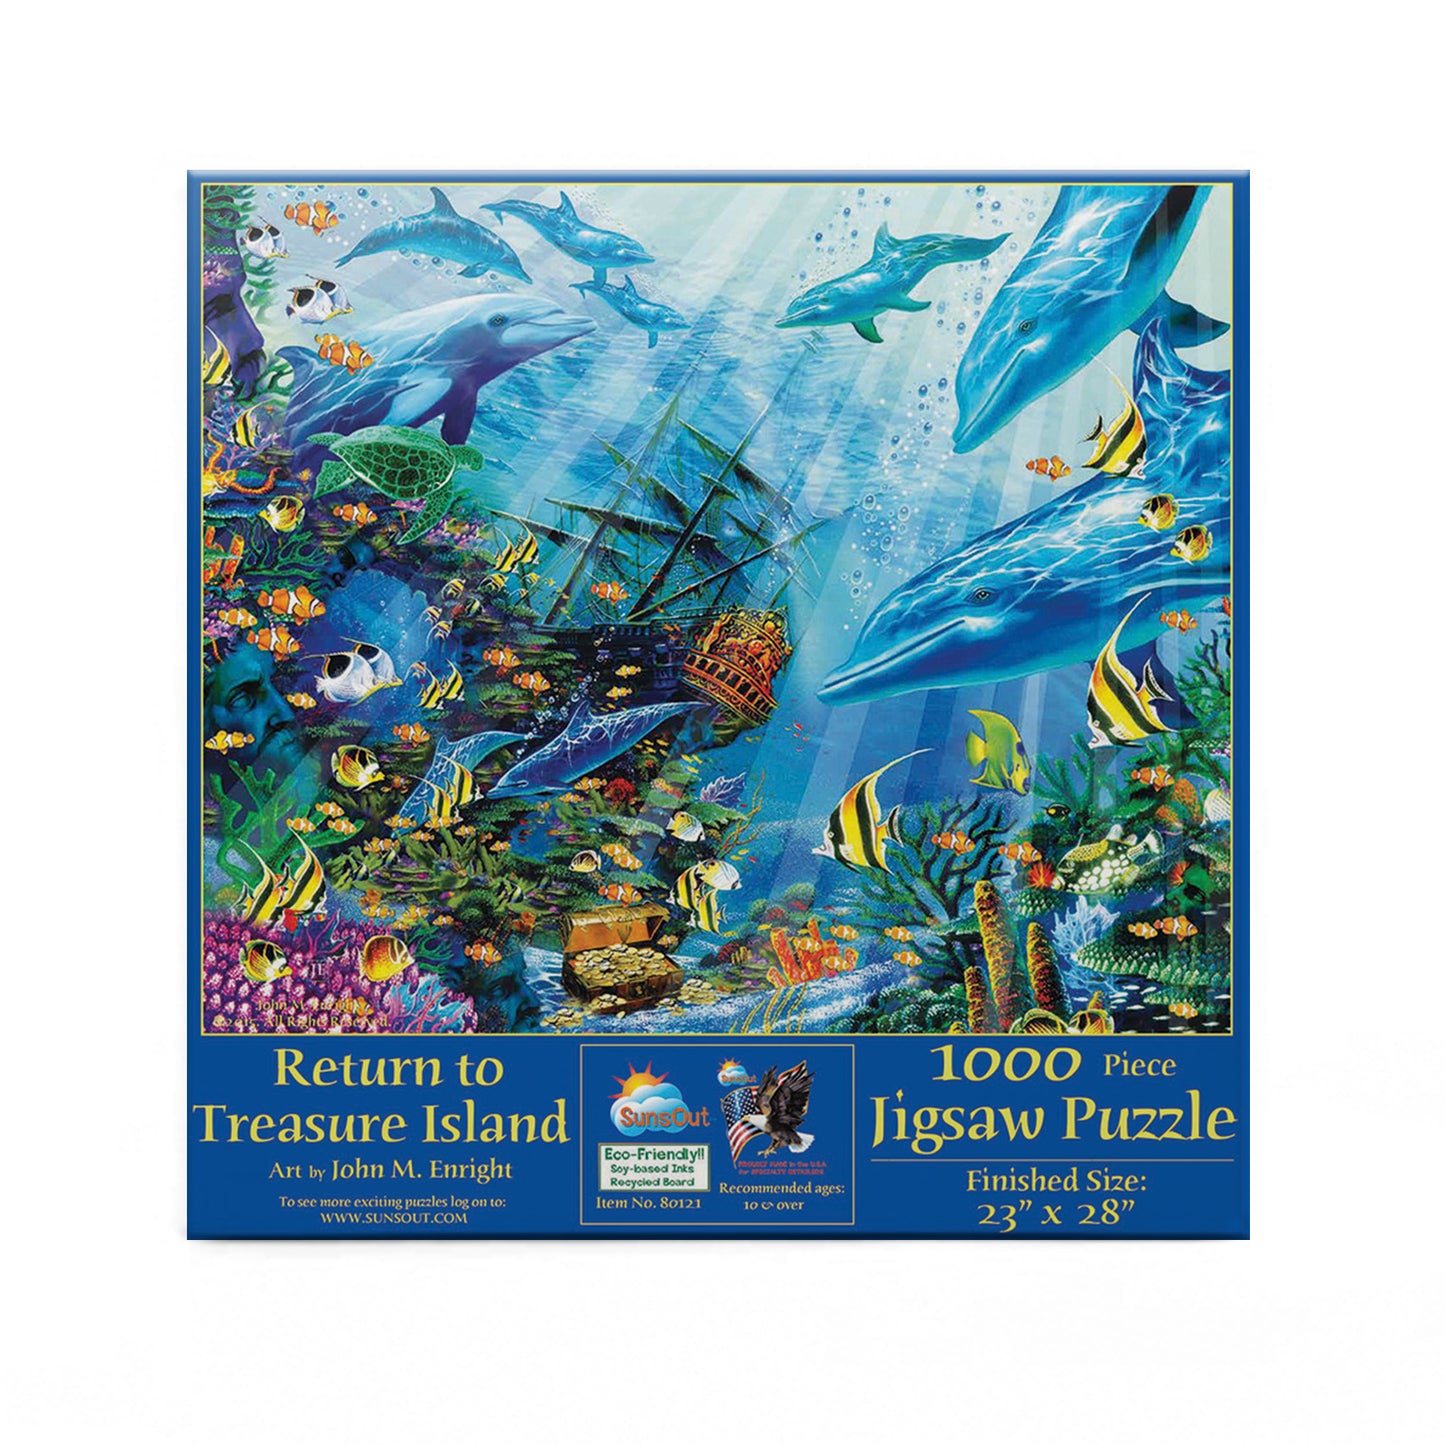 Return to Treasure Island - 1000 Piece Jigsaw Puzzle